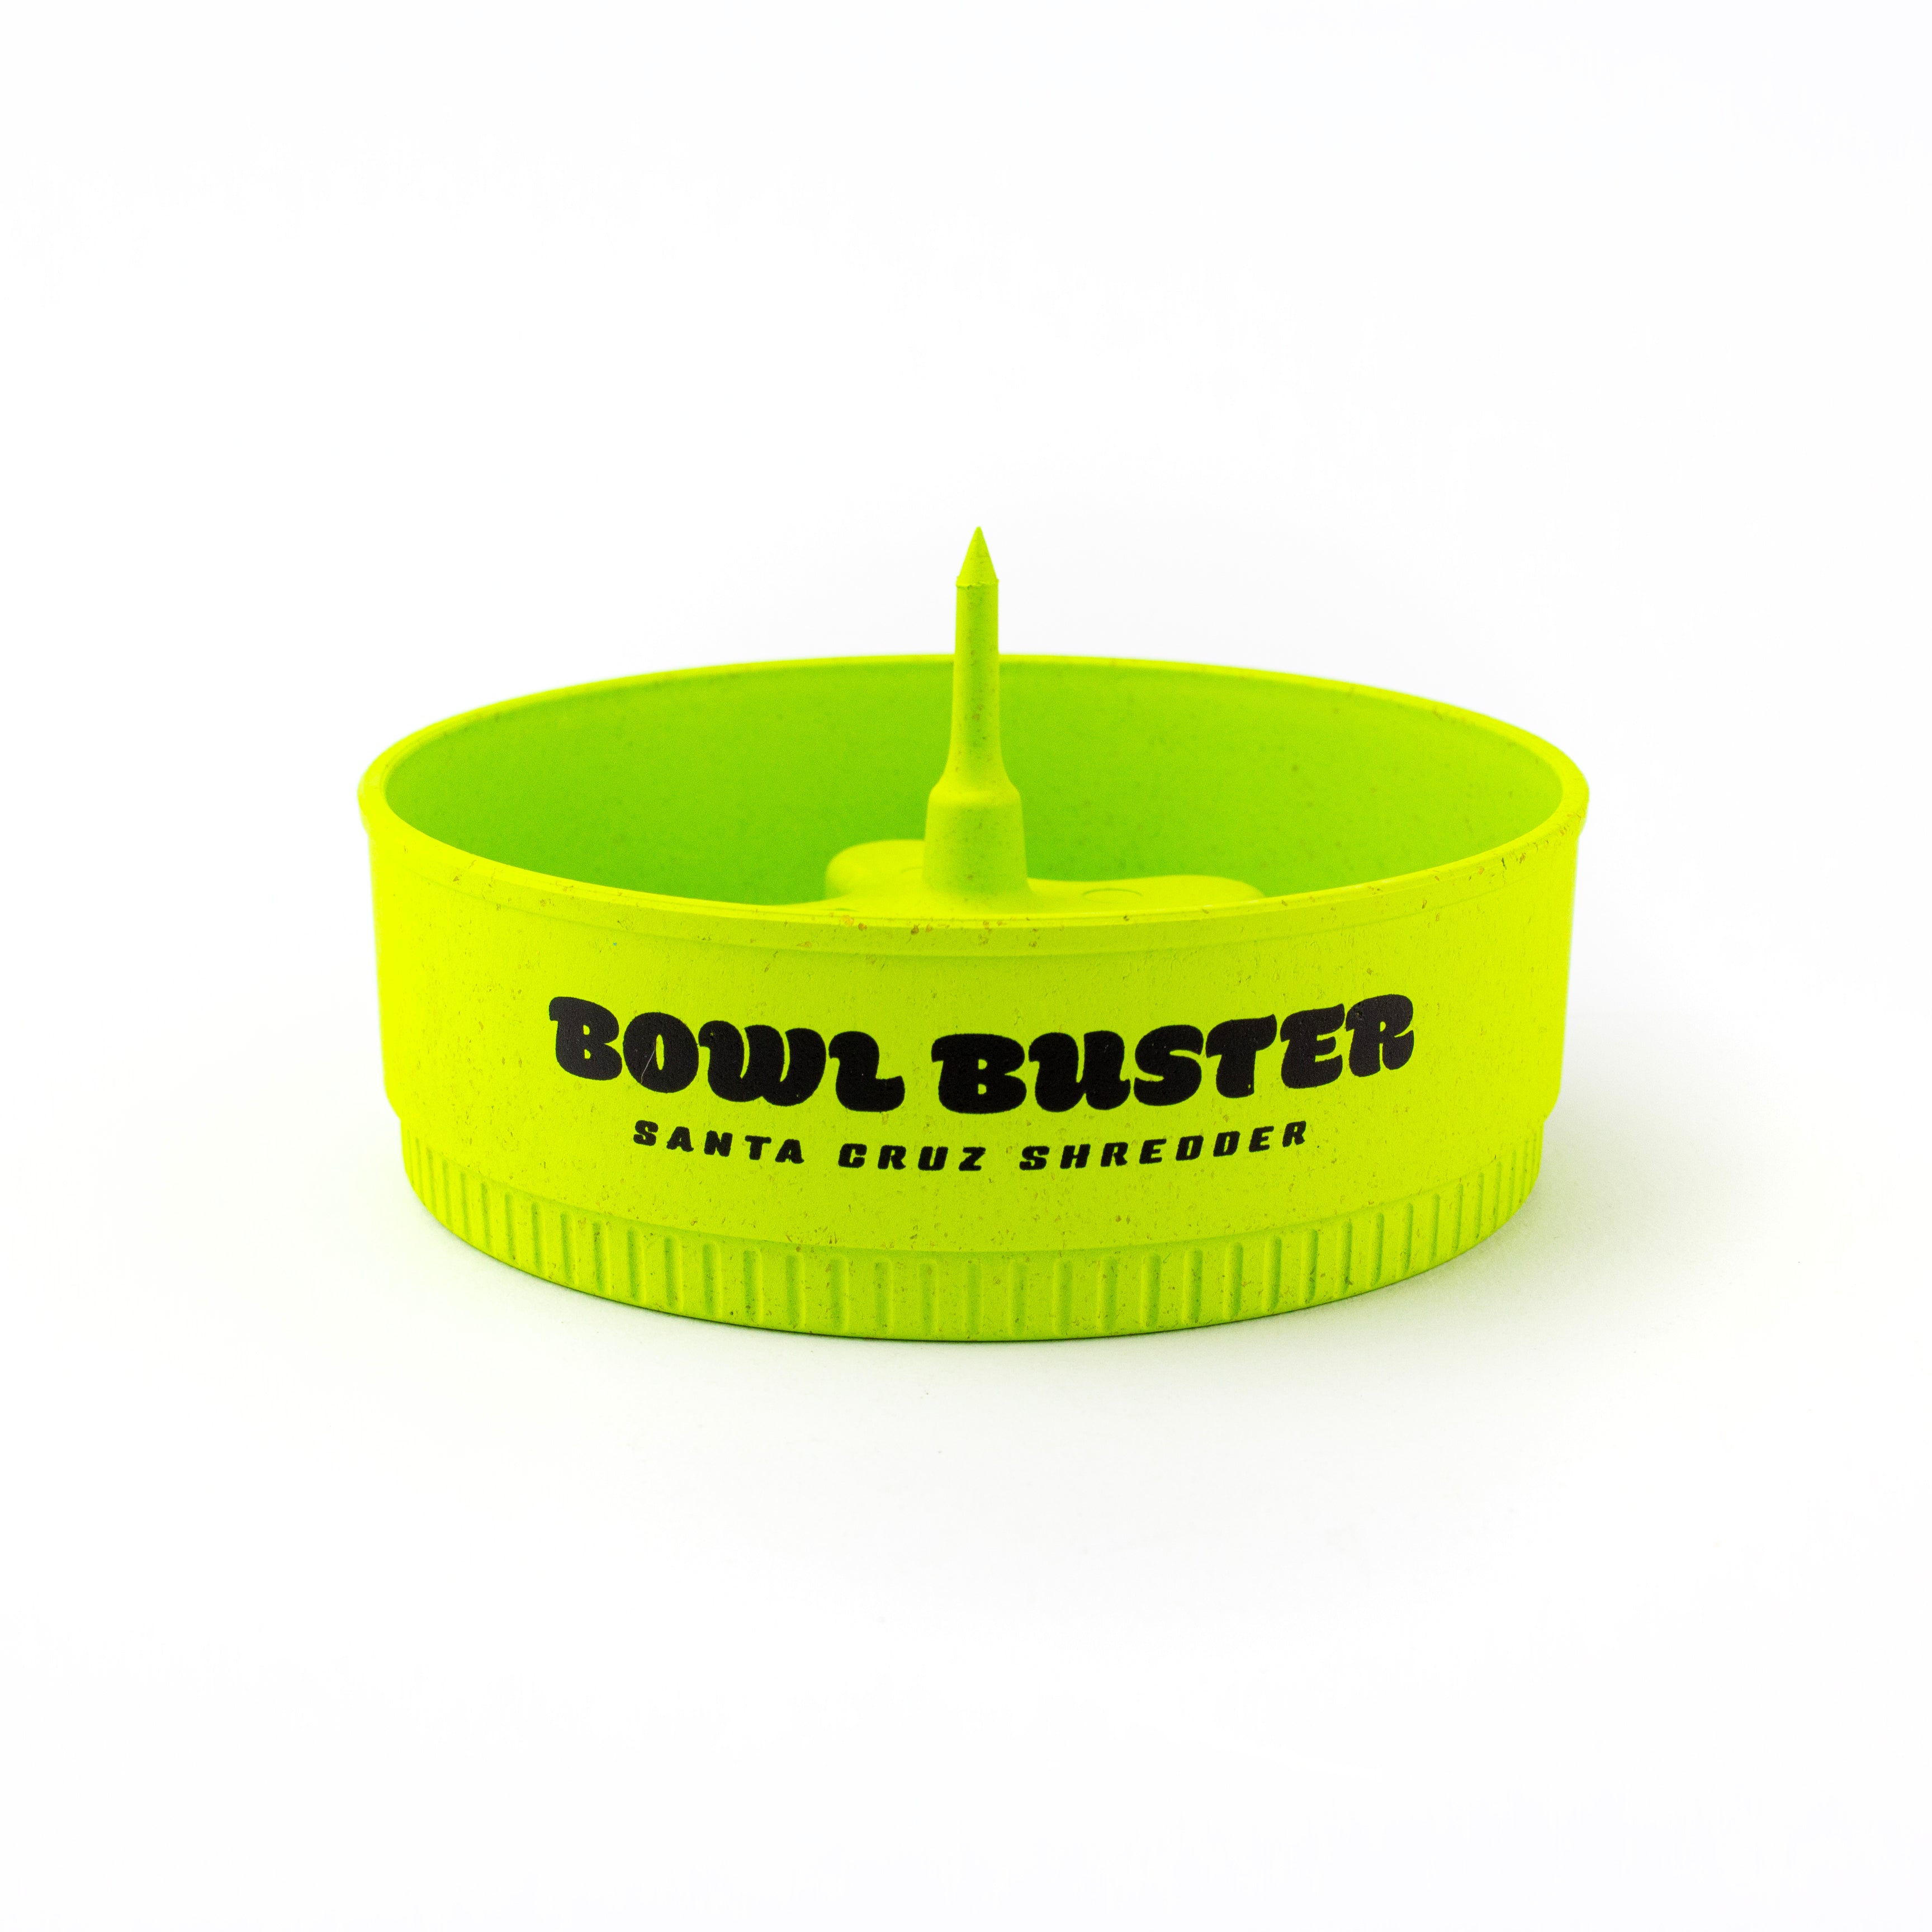 Santa Cruz Shredder, Bowl Buster Ash Tray